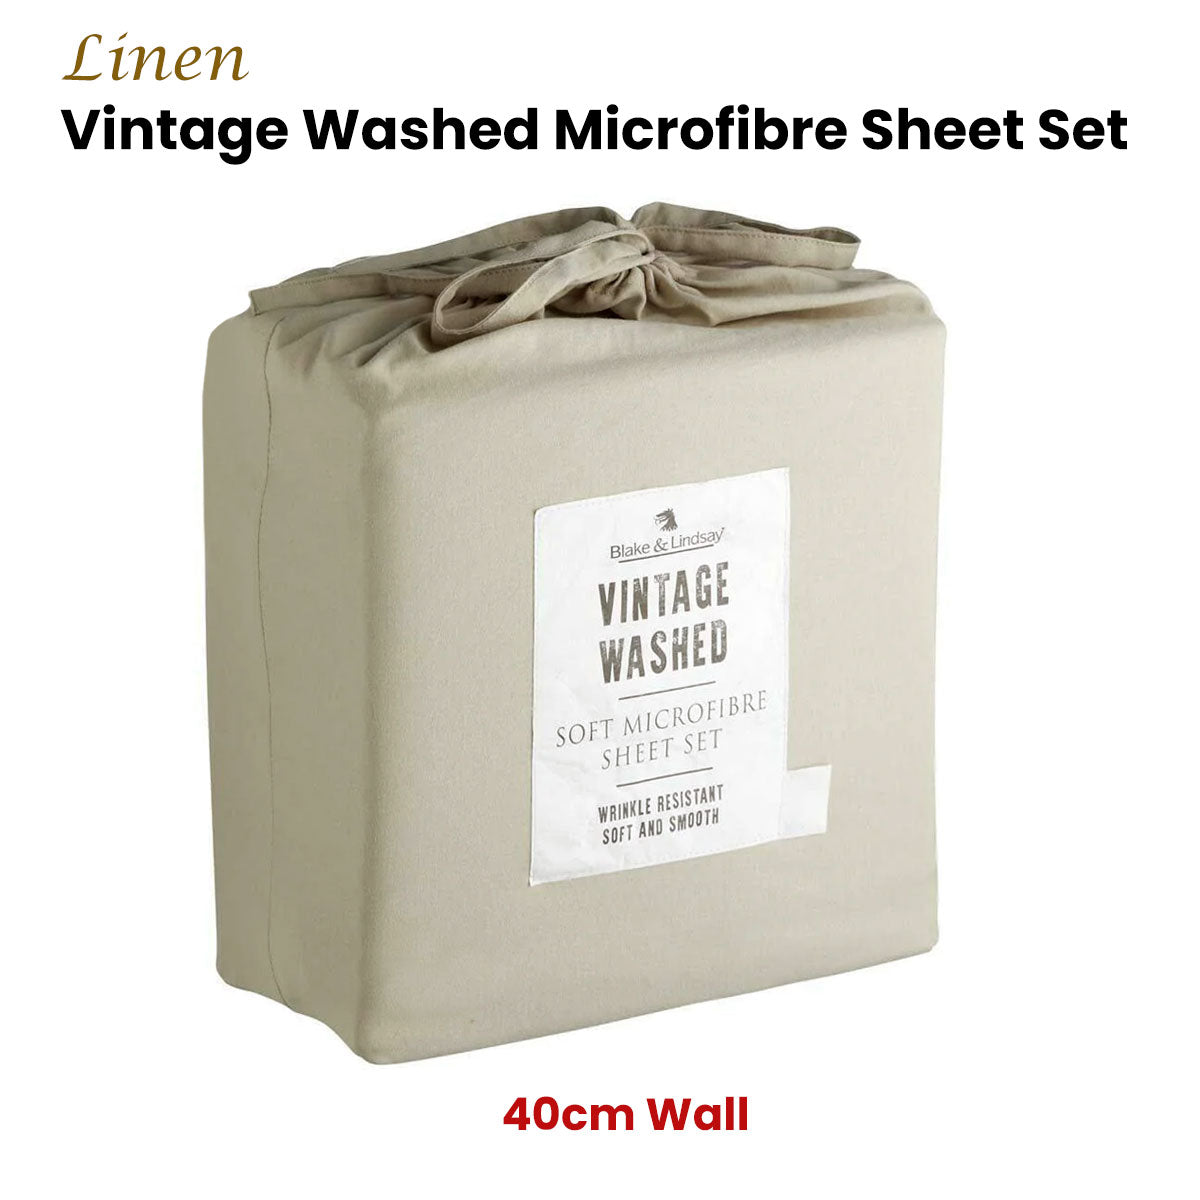 Blake & Lindsay Linen Vintage Washed Microfibre Sheet Set 40cm Wall Queen